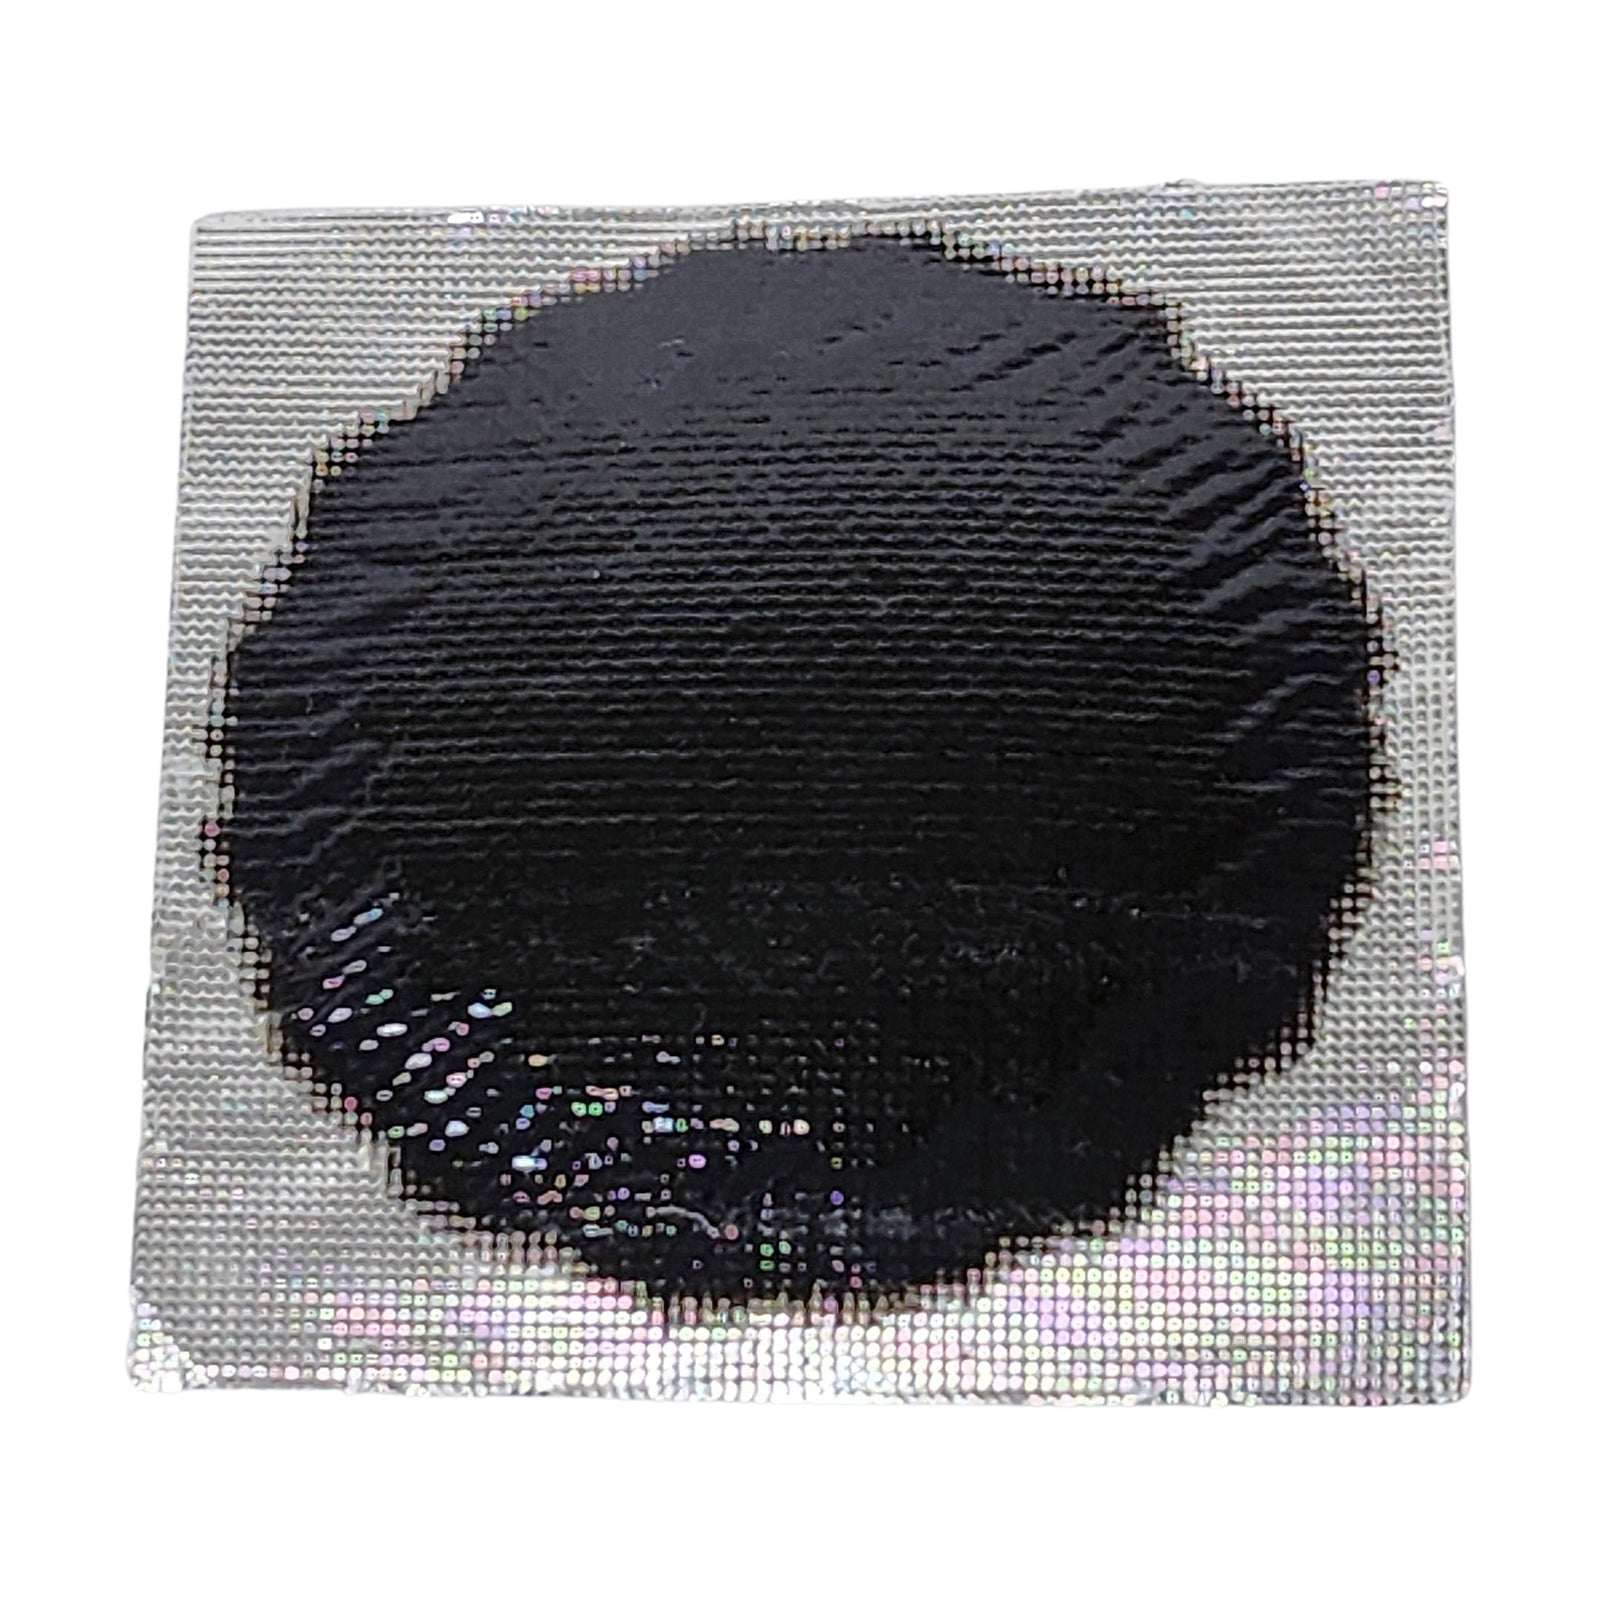 Rema B-0 Tube Patch, 1-1/4" Round, Black Edge (100 bx)